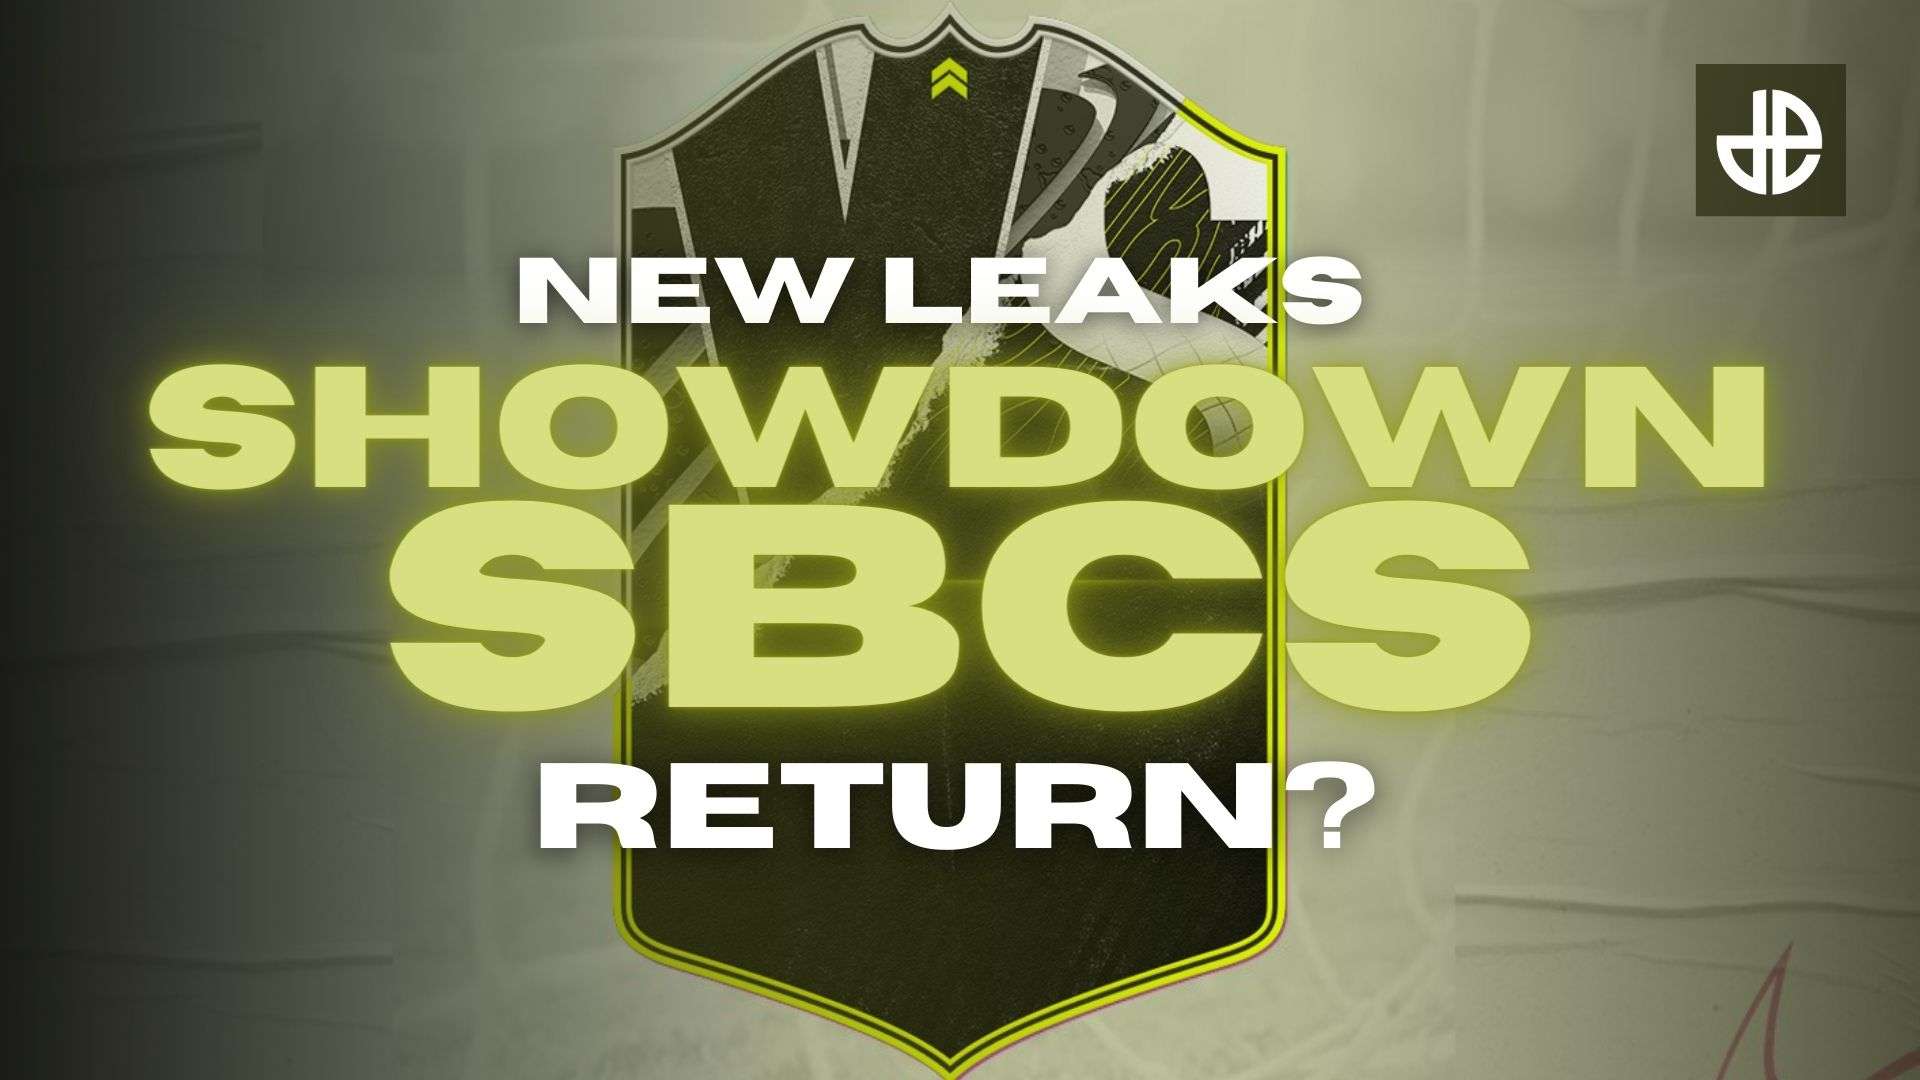 New FIFA 21 Ultimate Team leaks reveal Showdown SBCs.